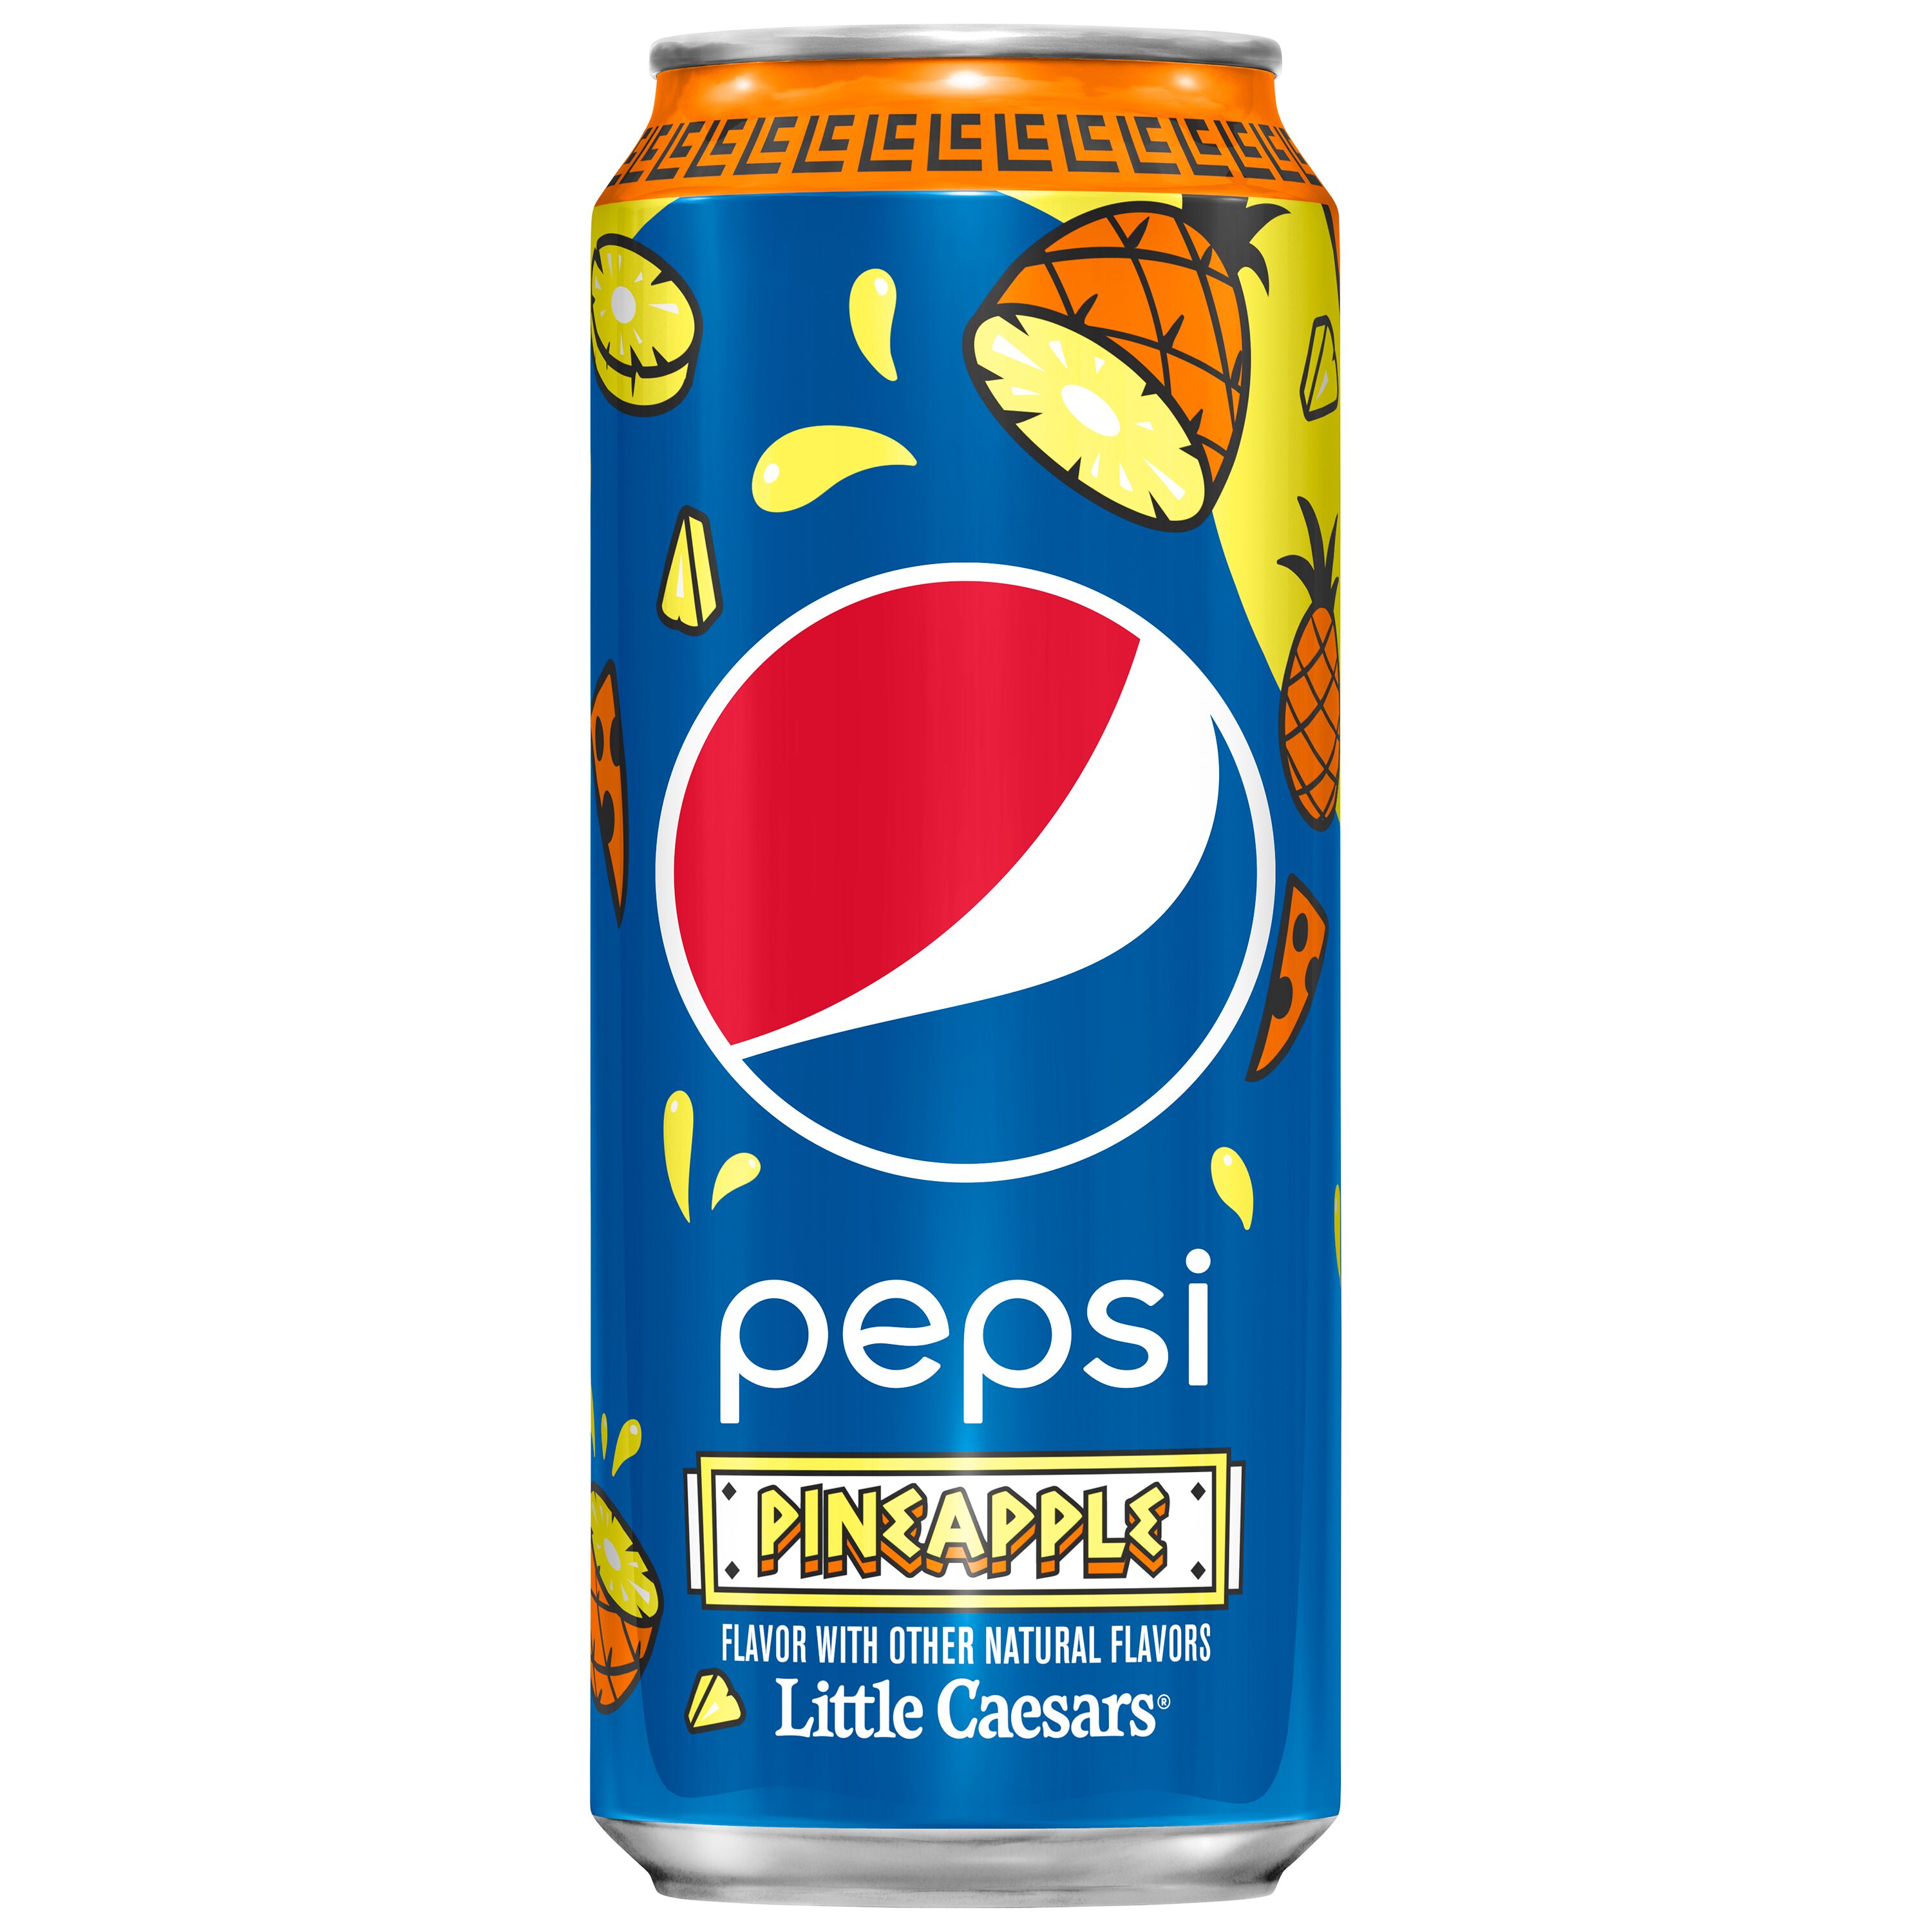 Pepsi, Little Caesars, Pineapple Flavor - SmartLabel™